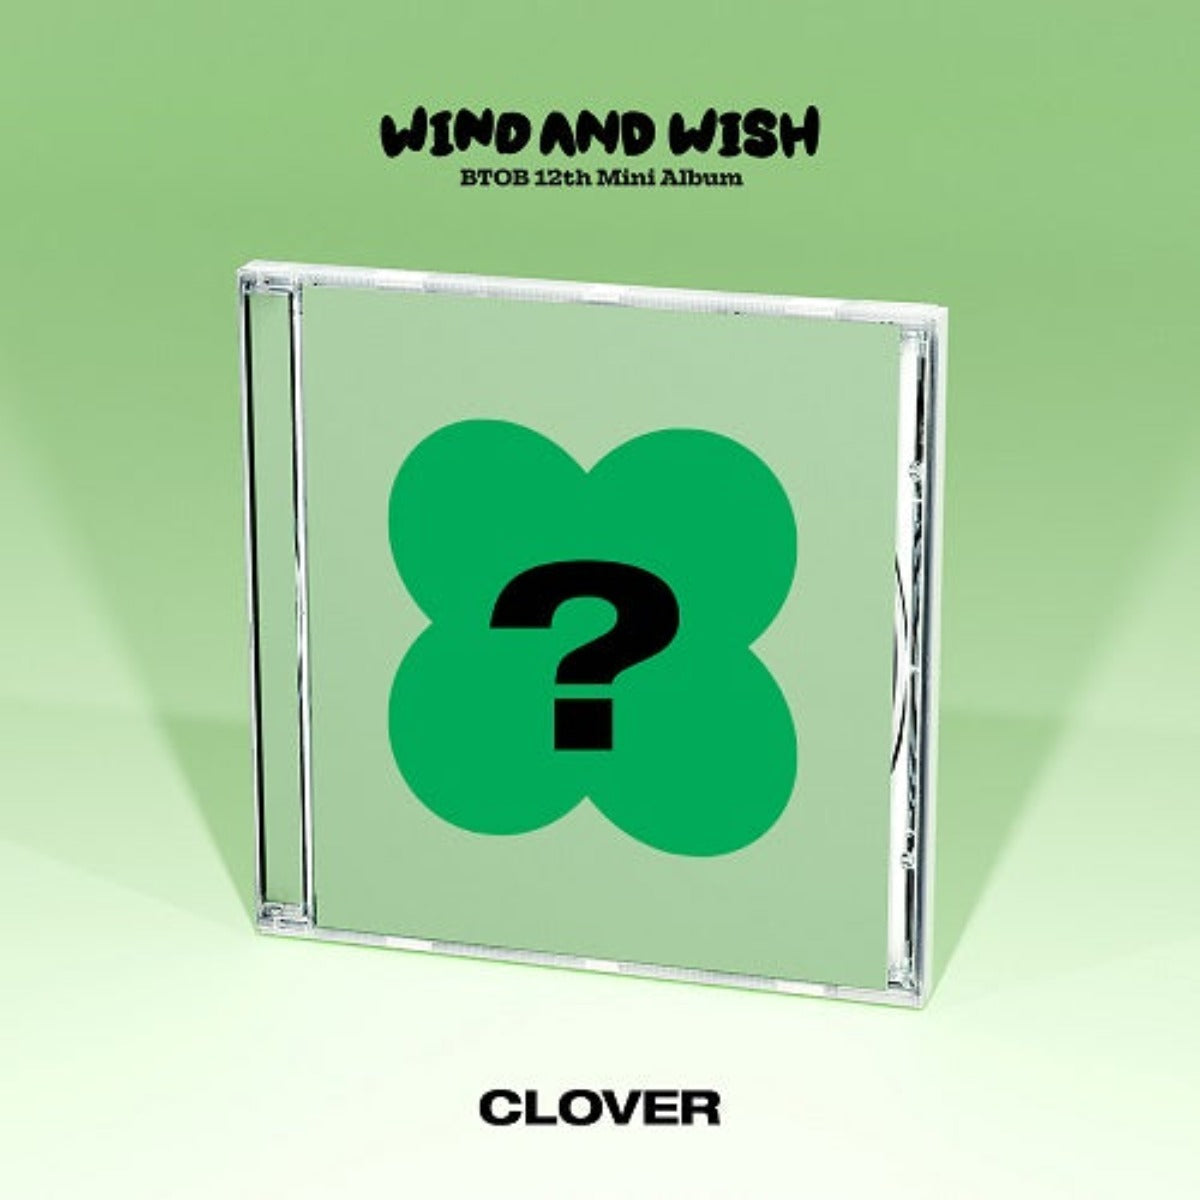 BTOB Mini Album Vol. 12 - Wind and Wish (Clover Version)